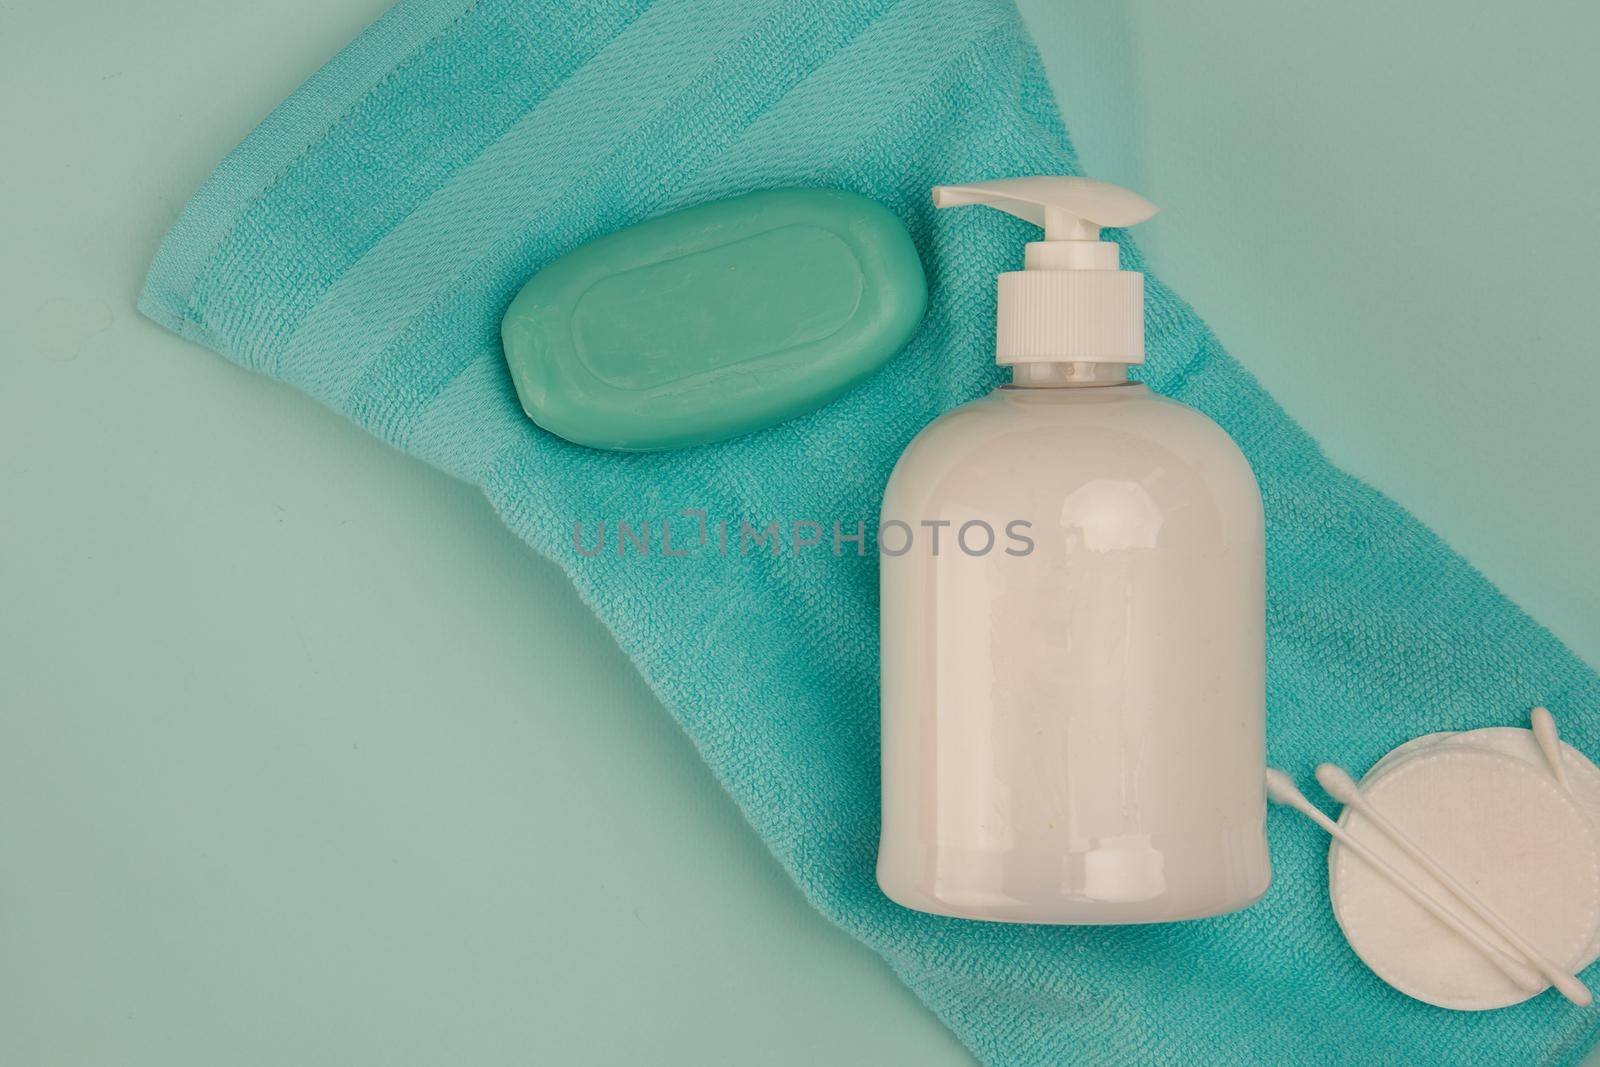 liquid soap hygiene body care accessories bathroom supplies by Vichizh